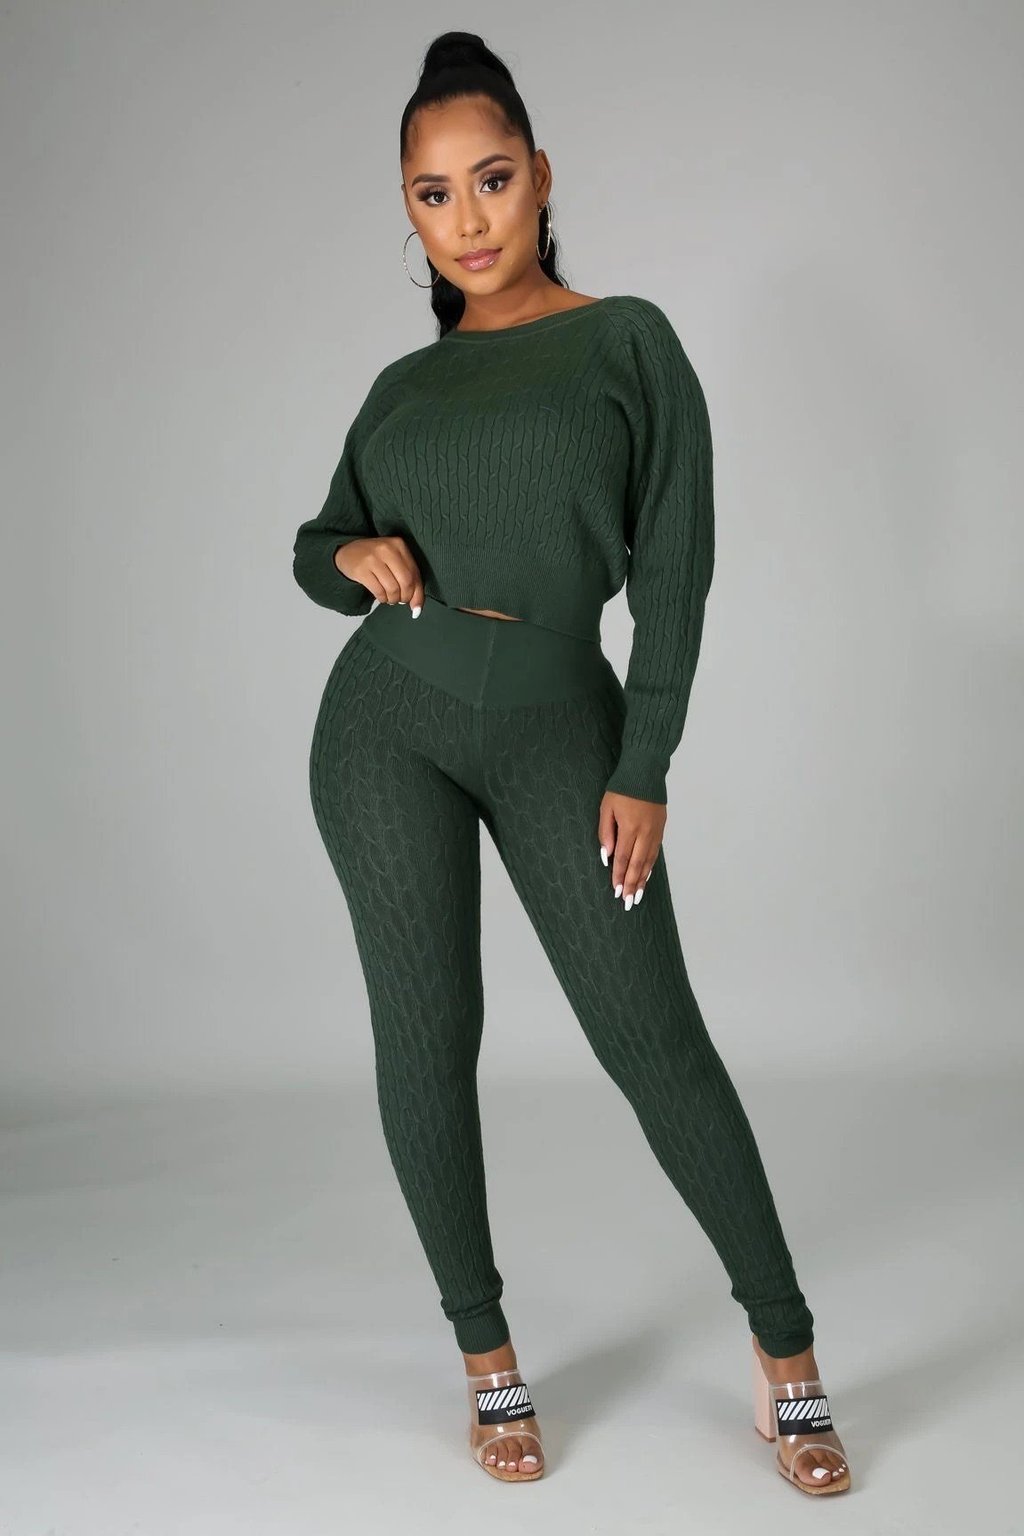 https://www.dlnihair.com/wp-content/uploads/2021/12/daisy-knit-sweater-legging-set-olive-front.jpg